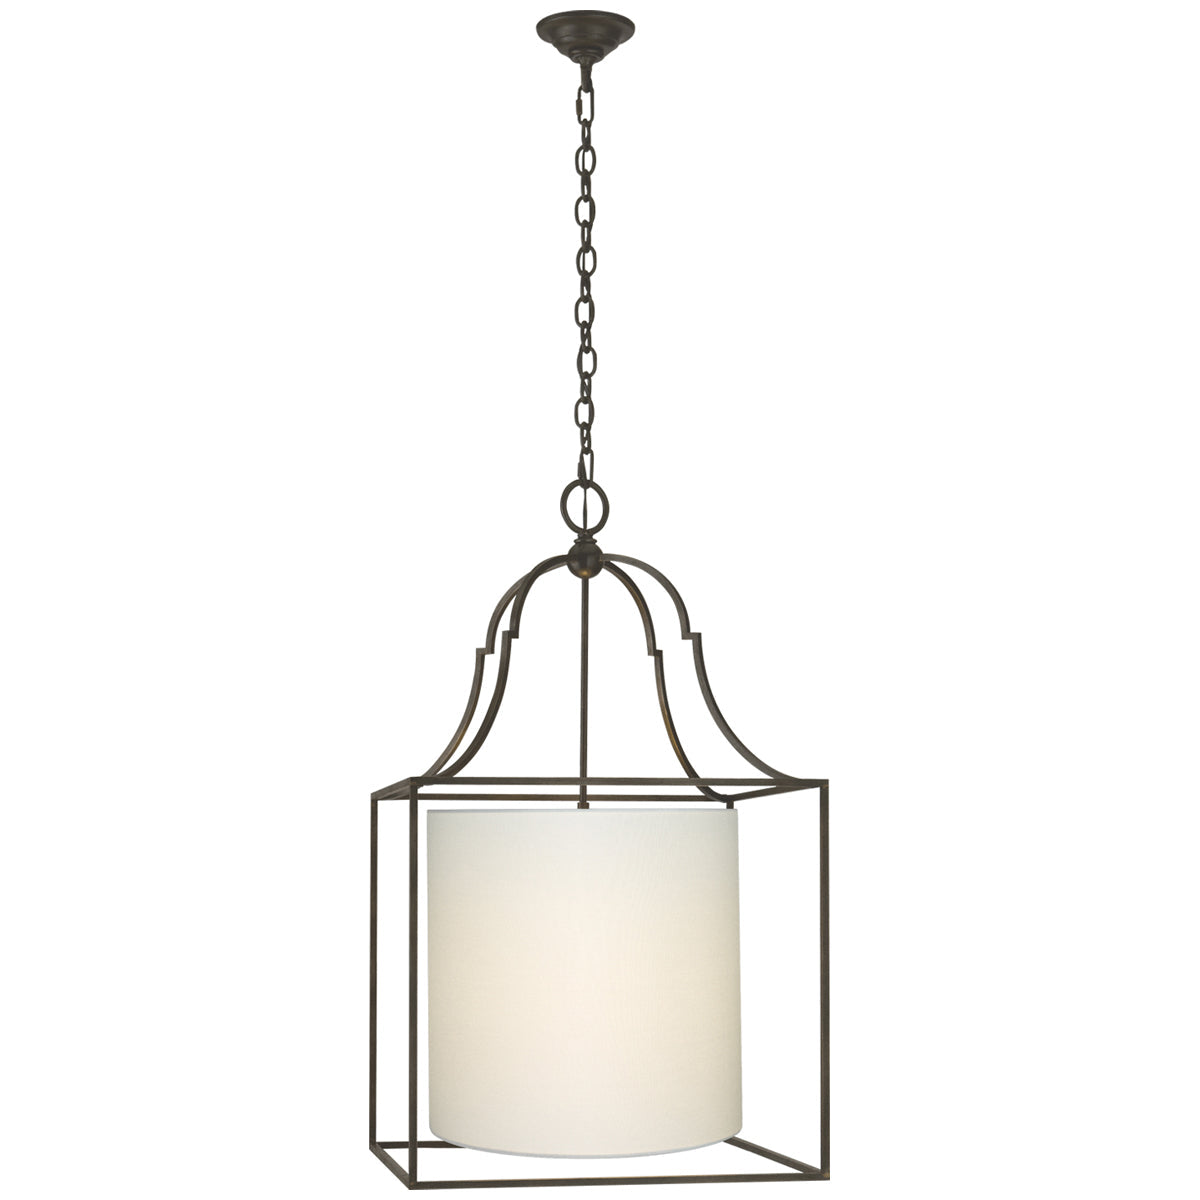 Visual Comfort Gustavian Lantern